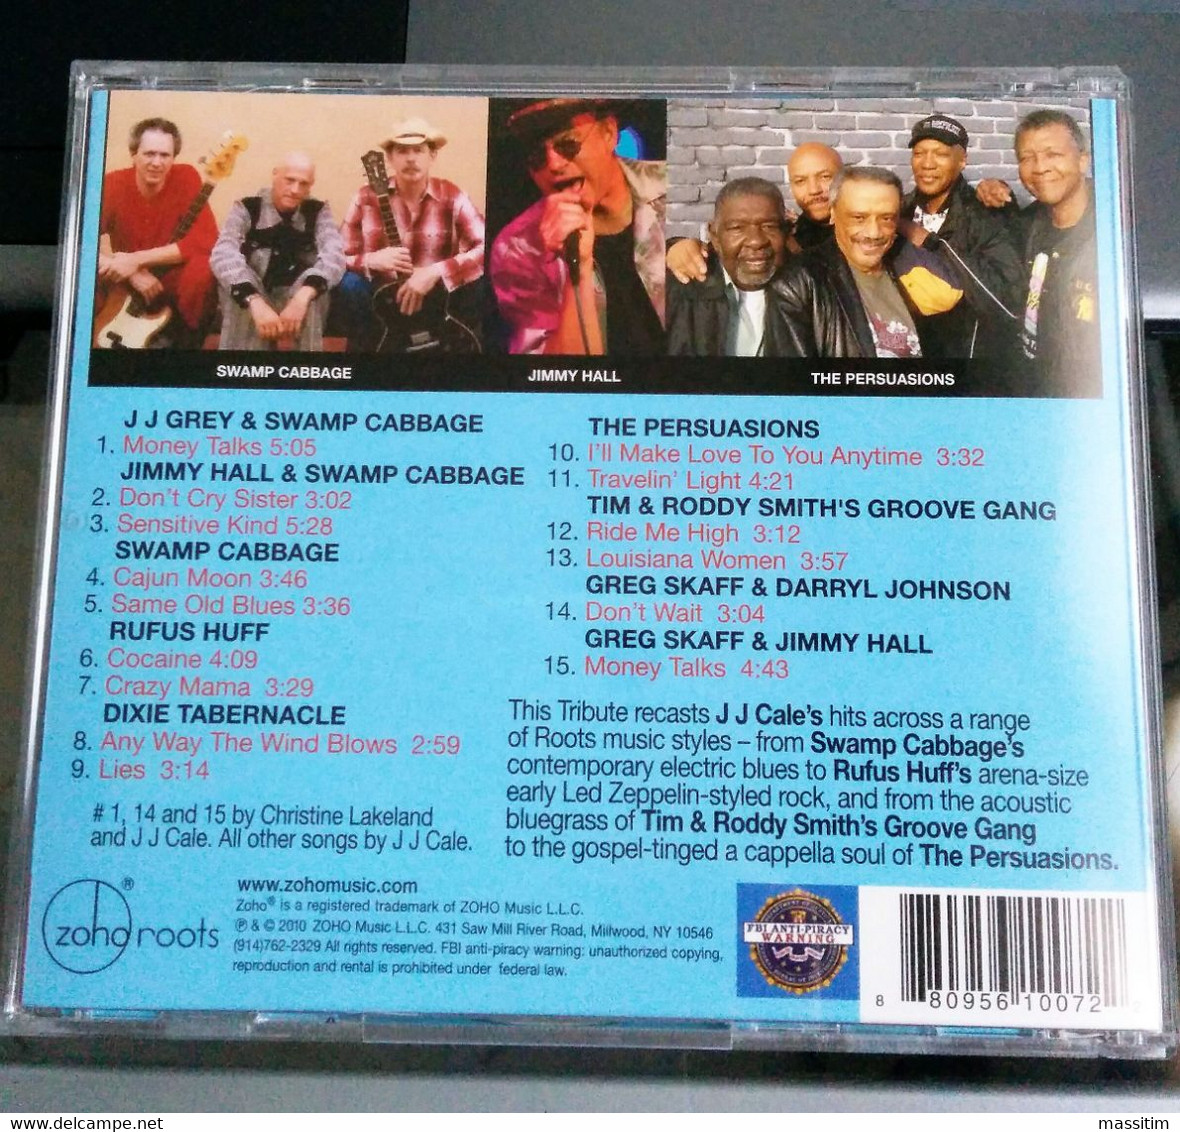 Tribute To JJ Cale. Vol. 1 - Zoho Record 2010 - CD Originale USA - Raro ! - Blues